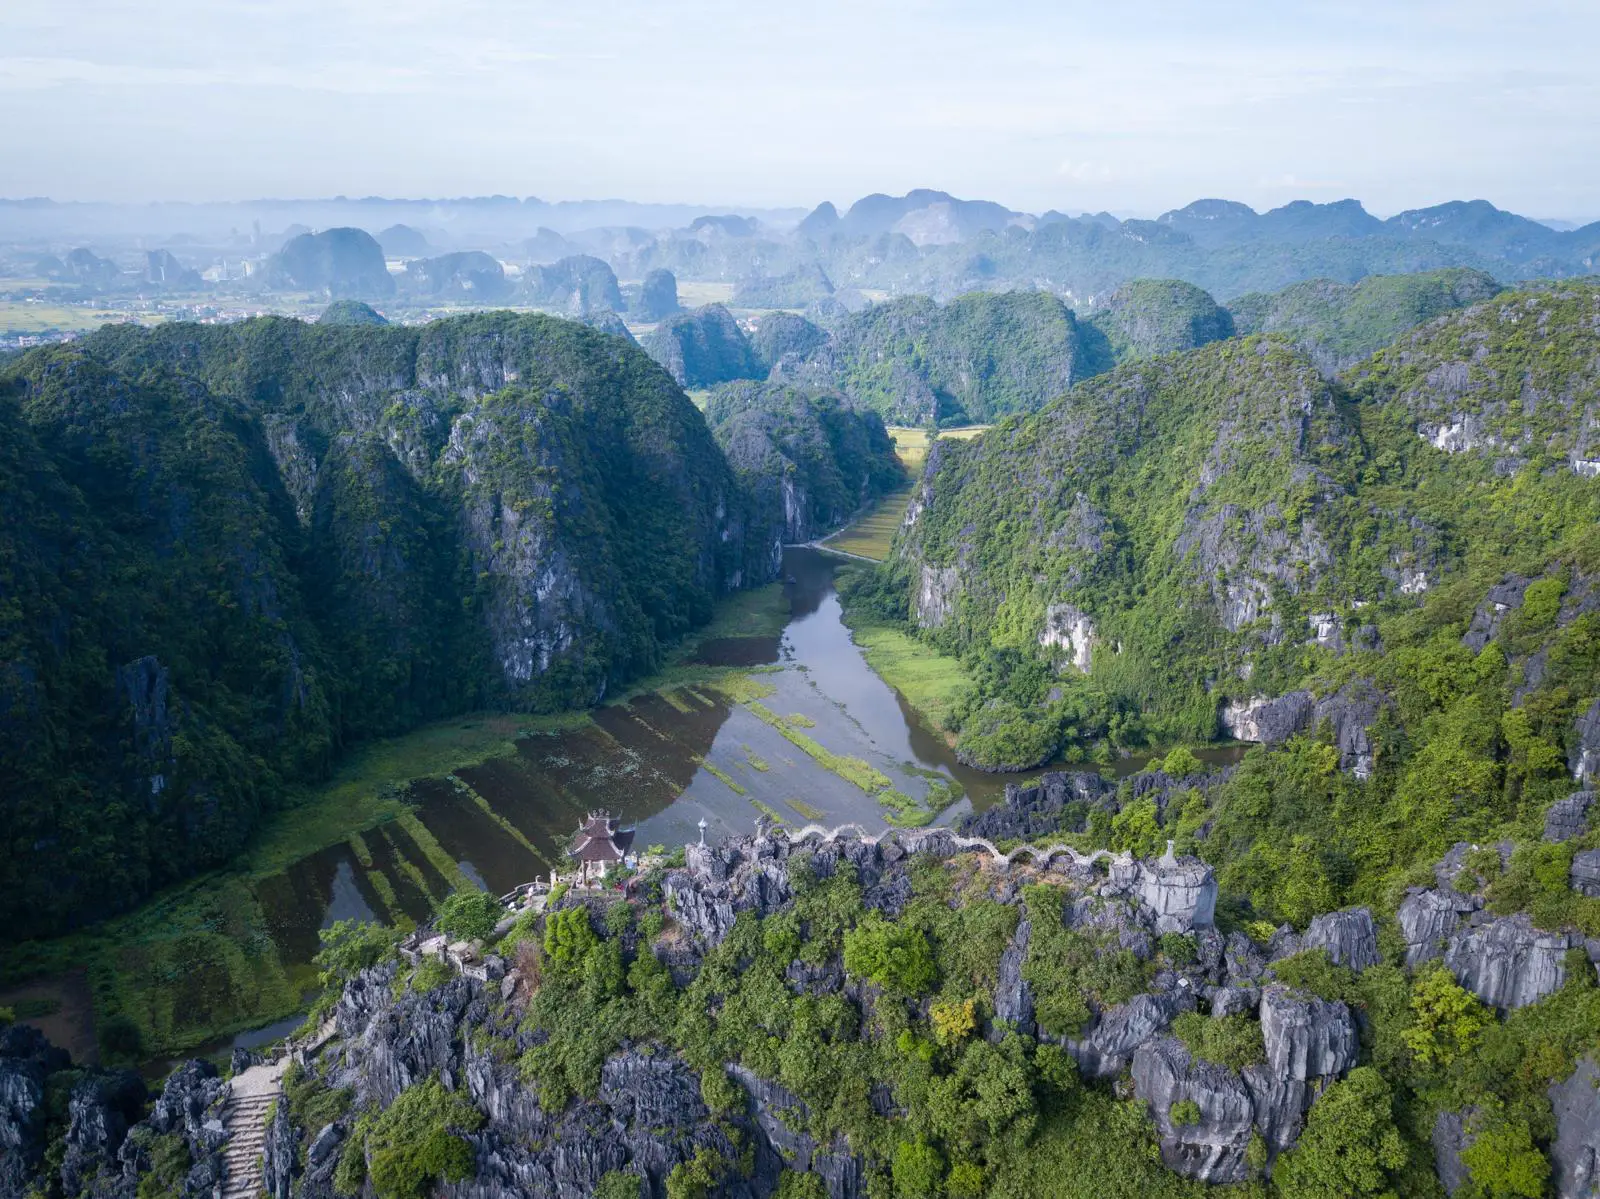 Mua Cave Ninh Binh - Vietnams Best Lookout - Unexplored Footsteps 2